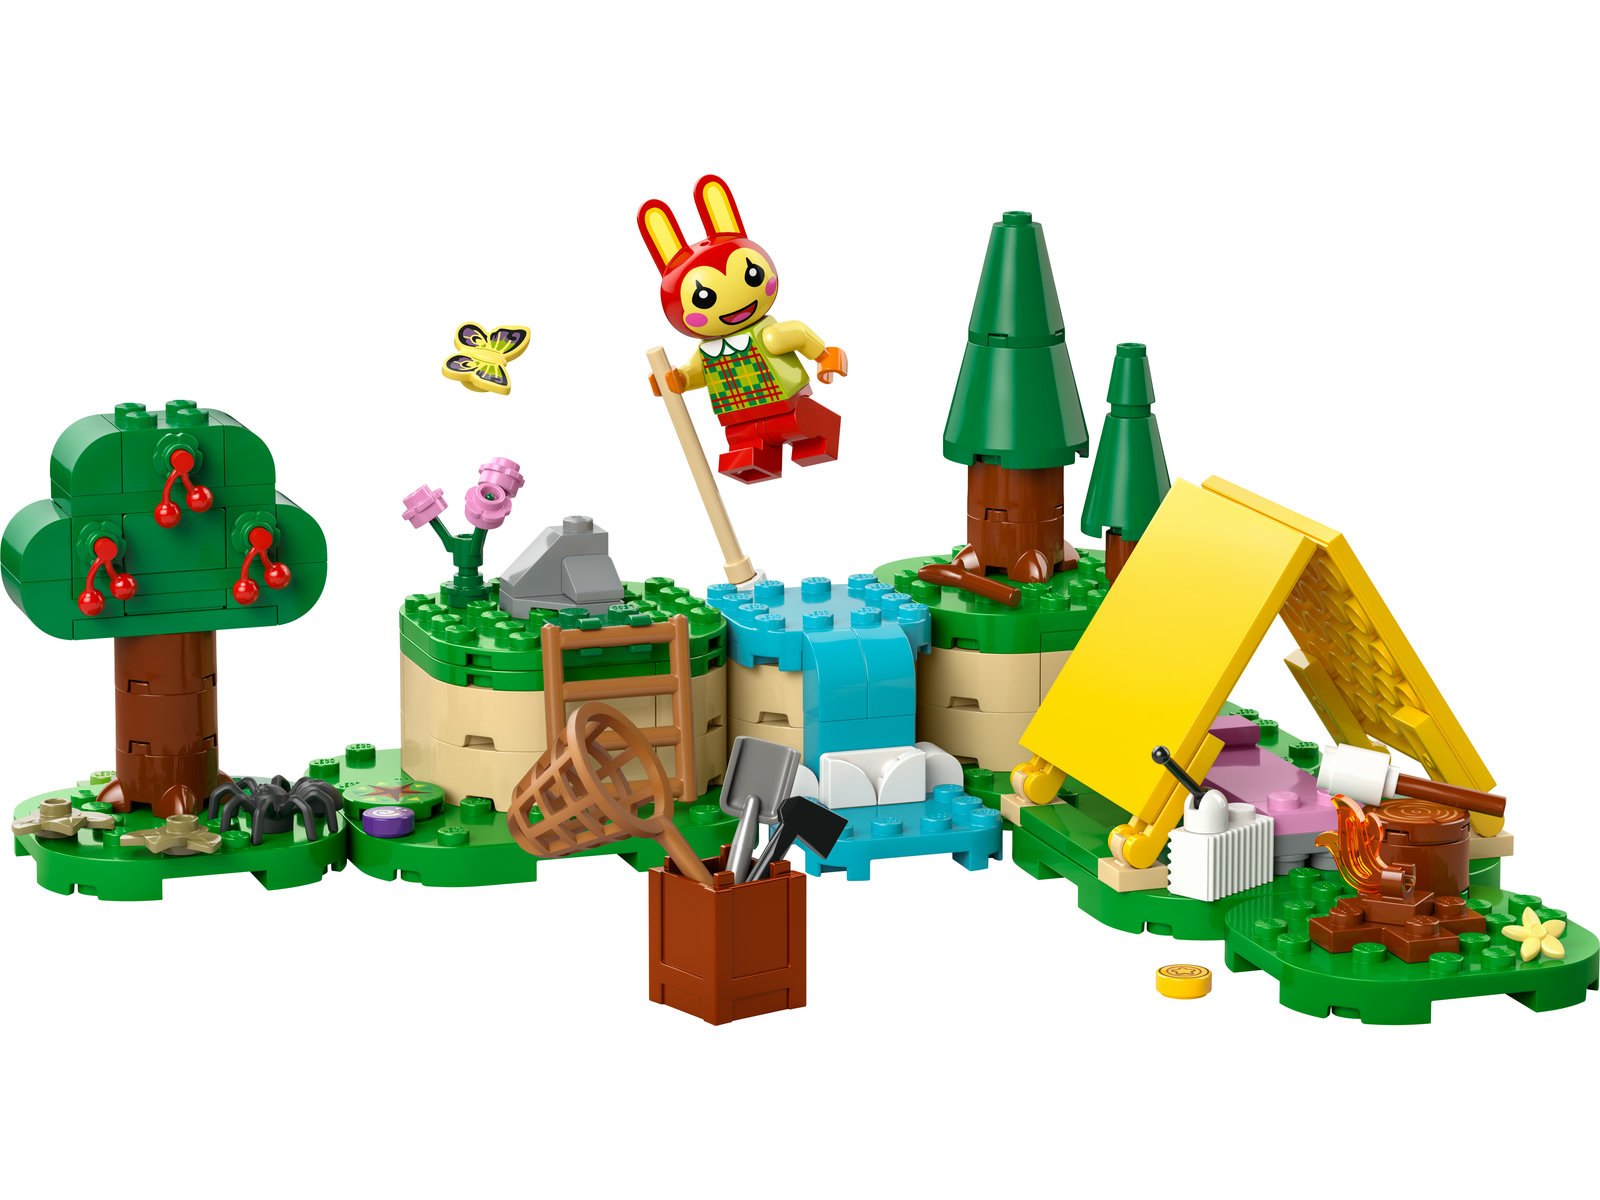 LEGO® Animal Crossing 77047 - Mimmis Outdoor-Spaß